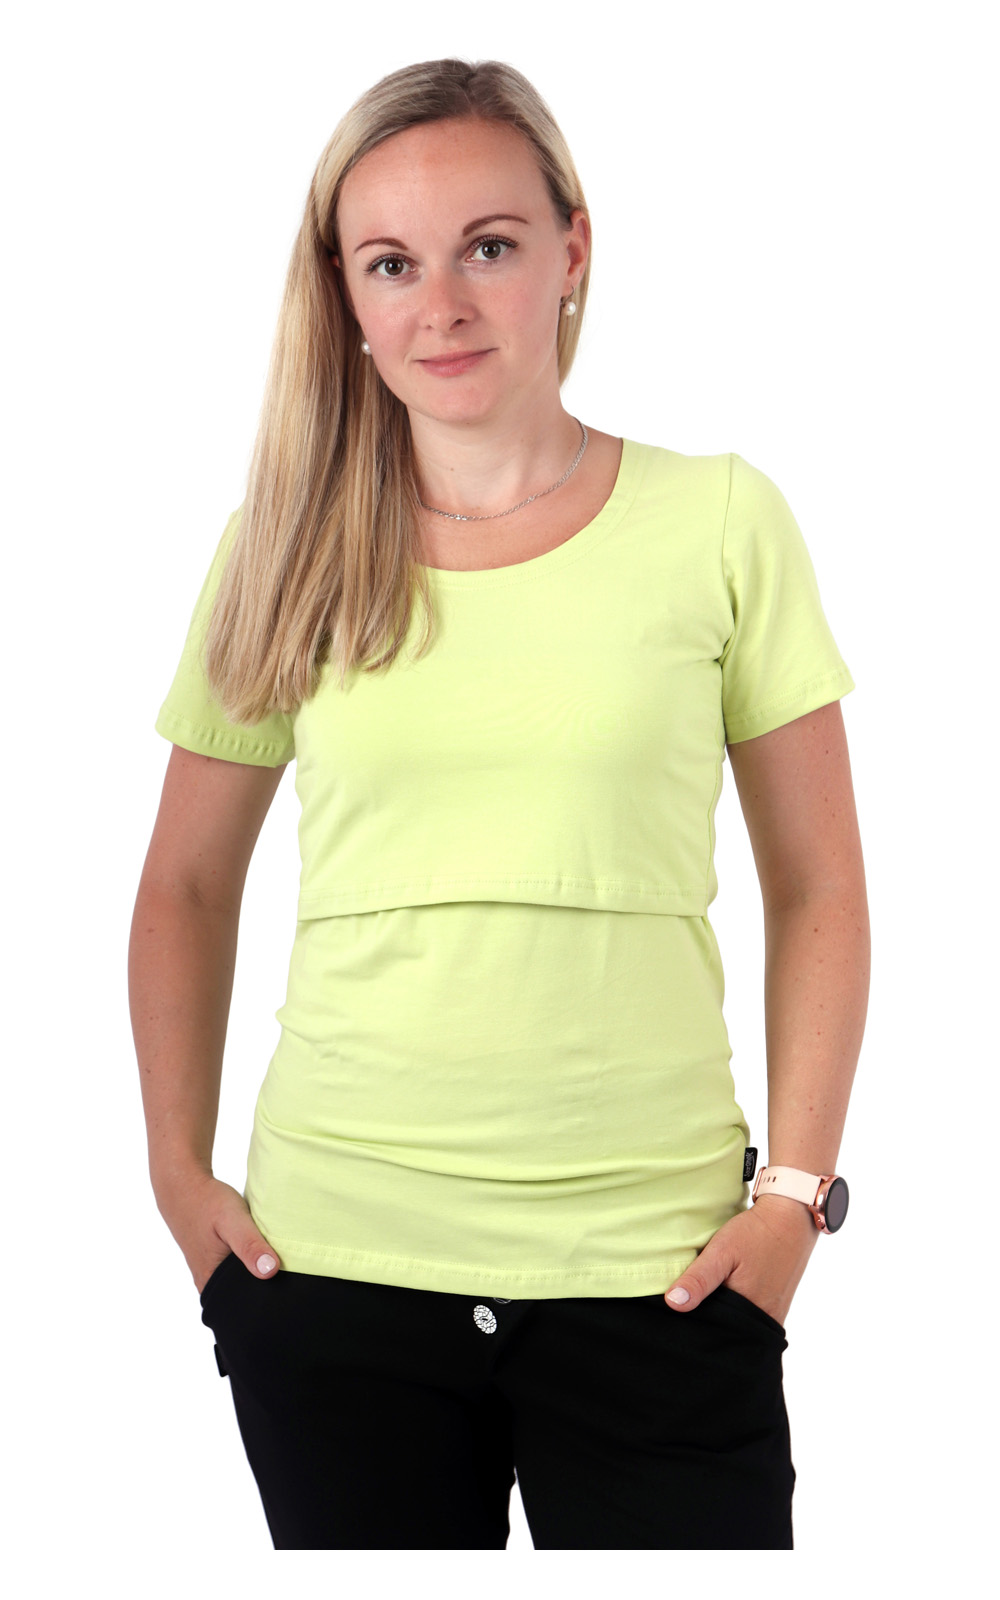 Breast-feeding T-shirt 04 Katerina, short sleeves, LIGHT GREEN